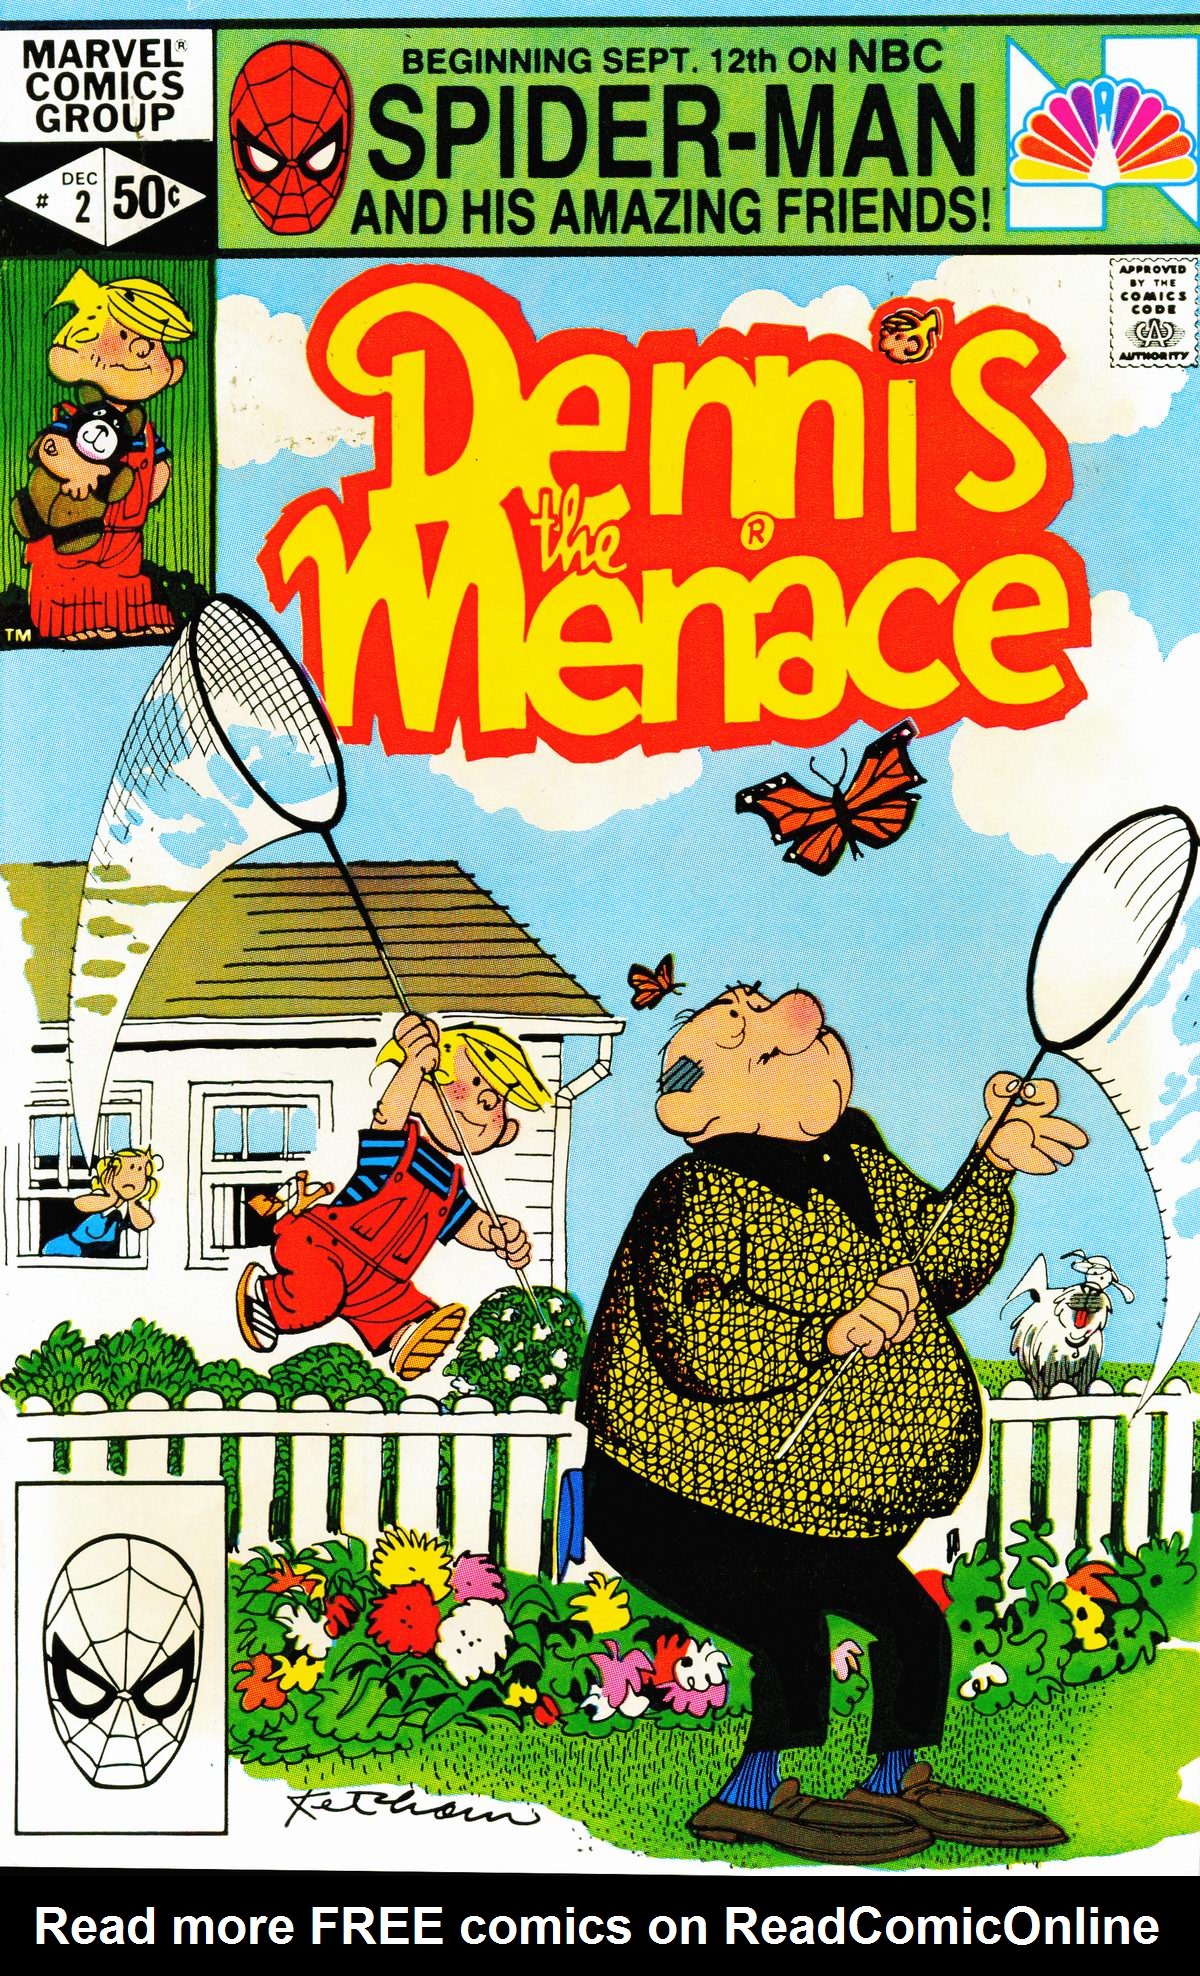 Dennis the Menace. 